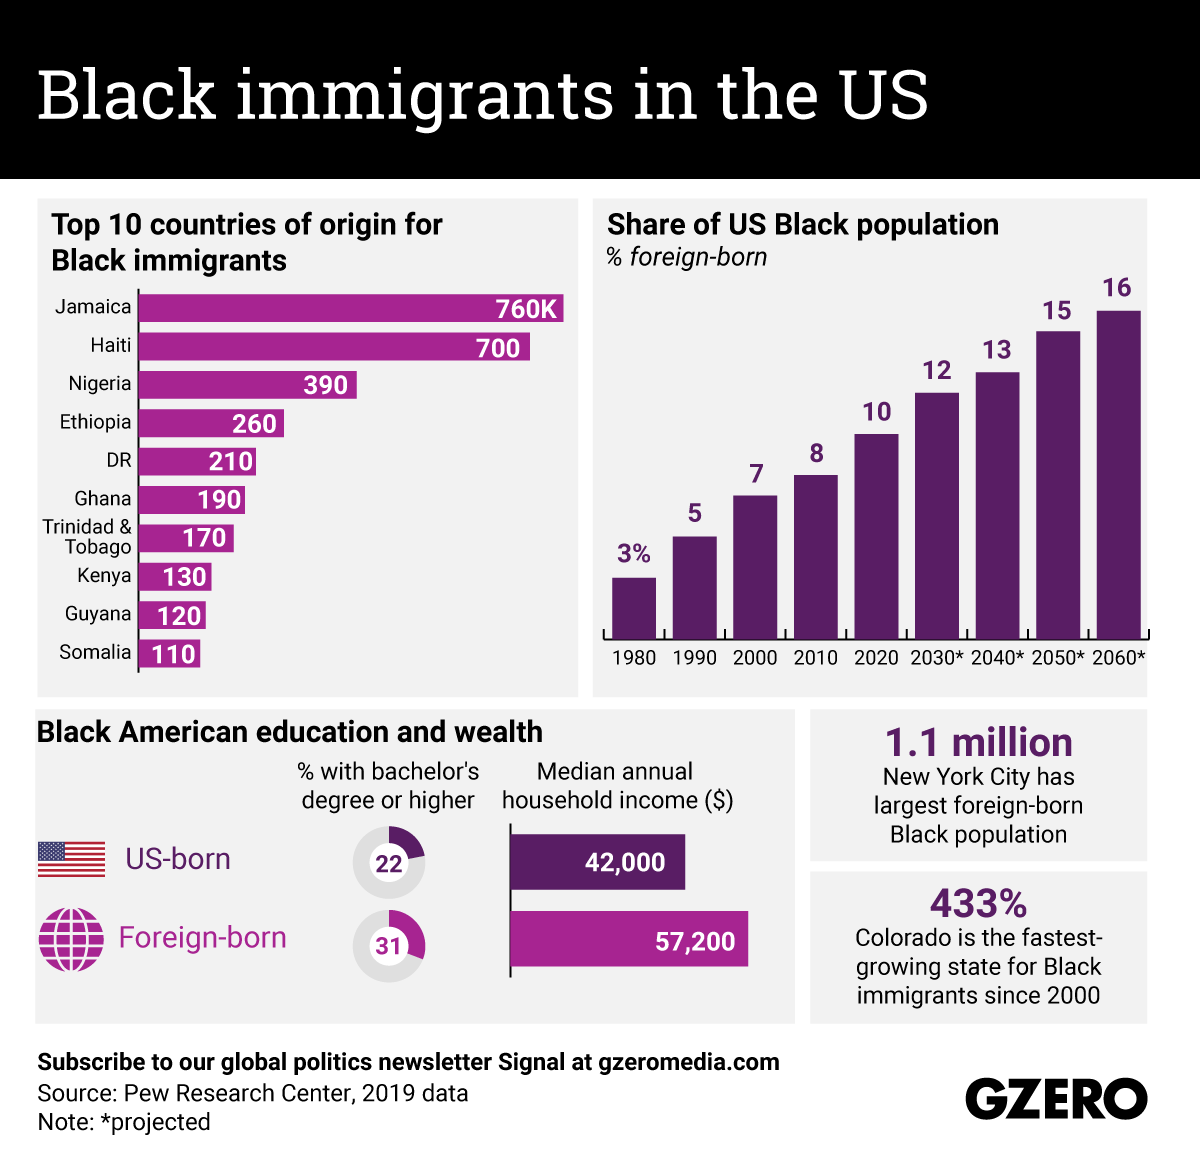 Black immigrants in the U.S.